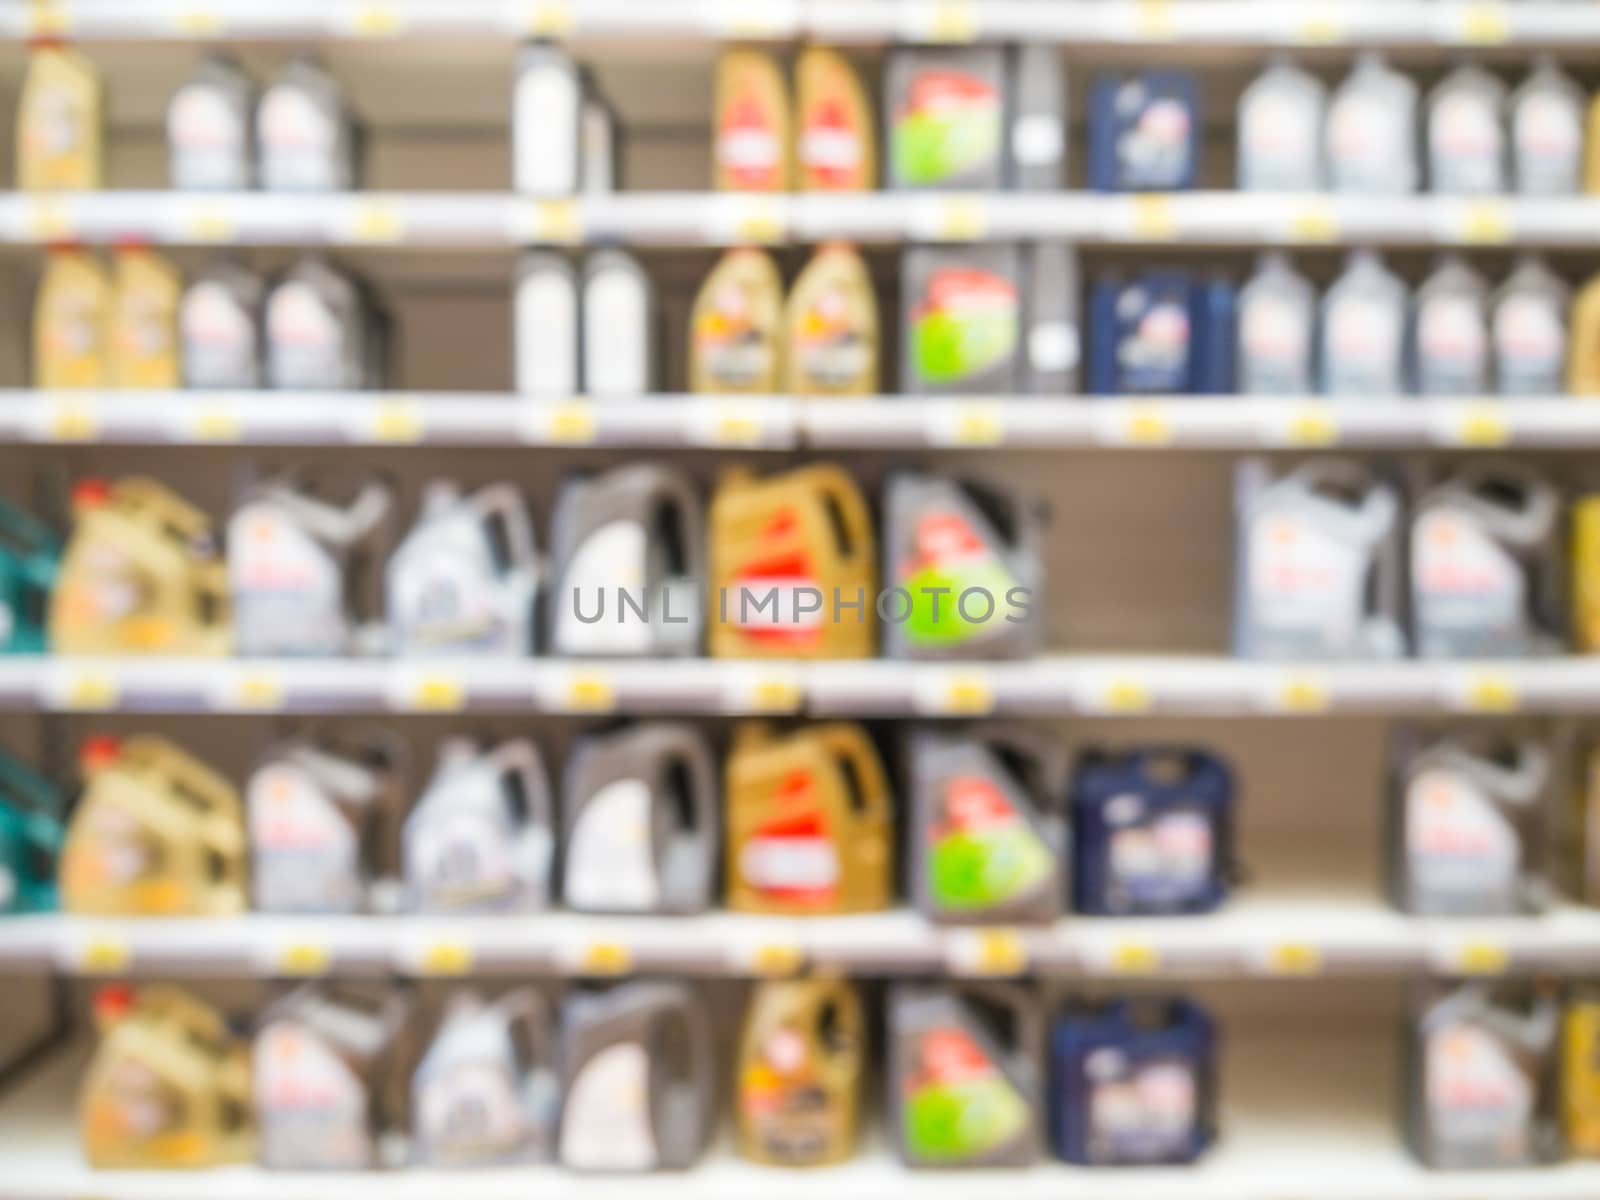 Blurred motor oil on shelves in supermarket by fascinadora